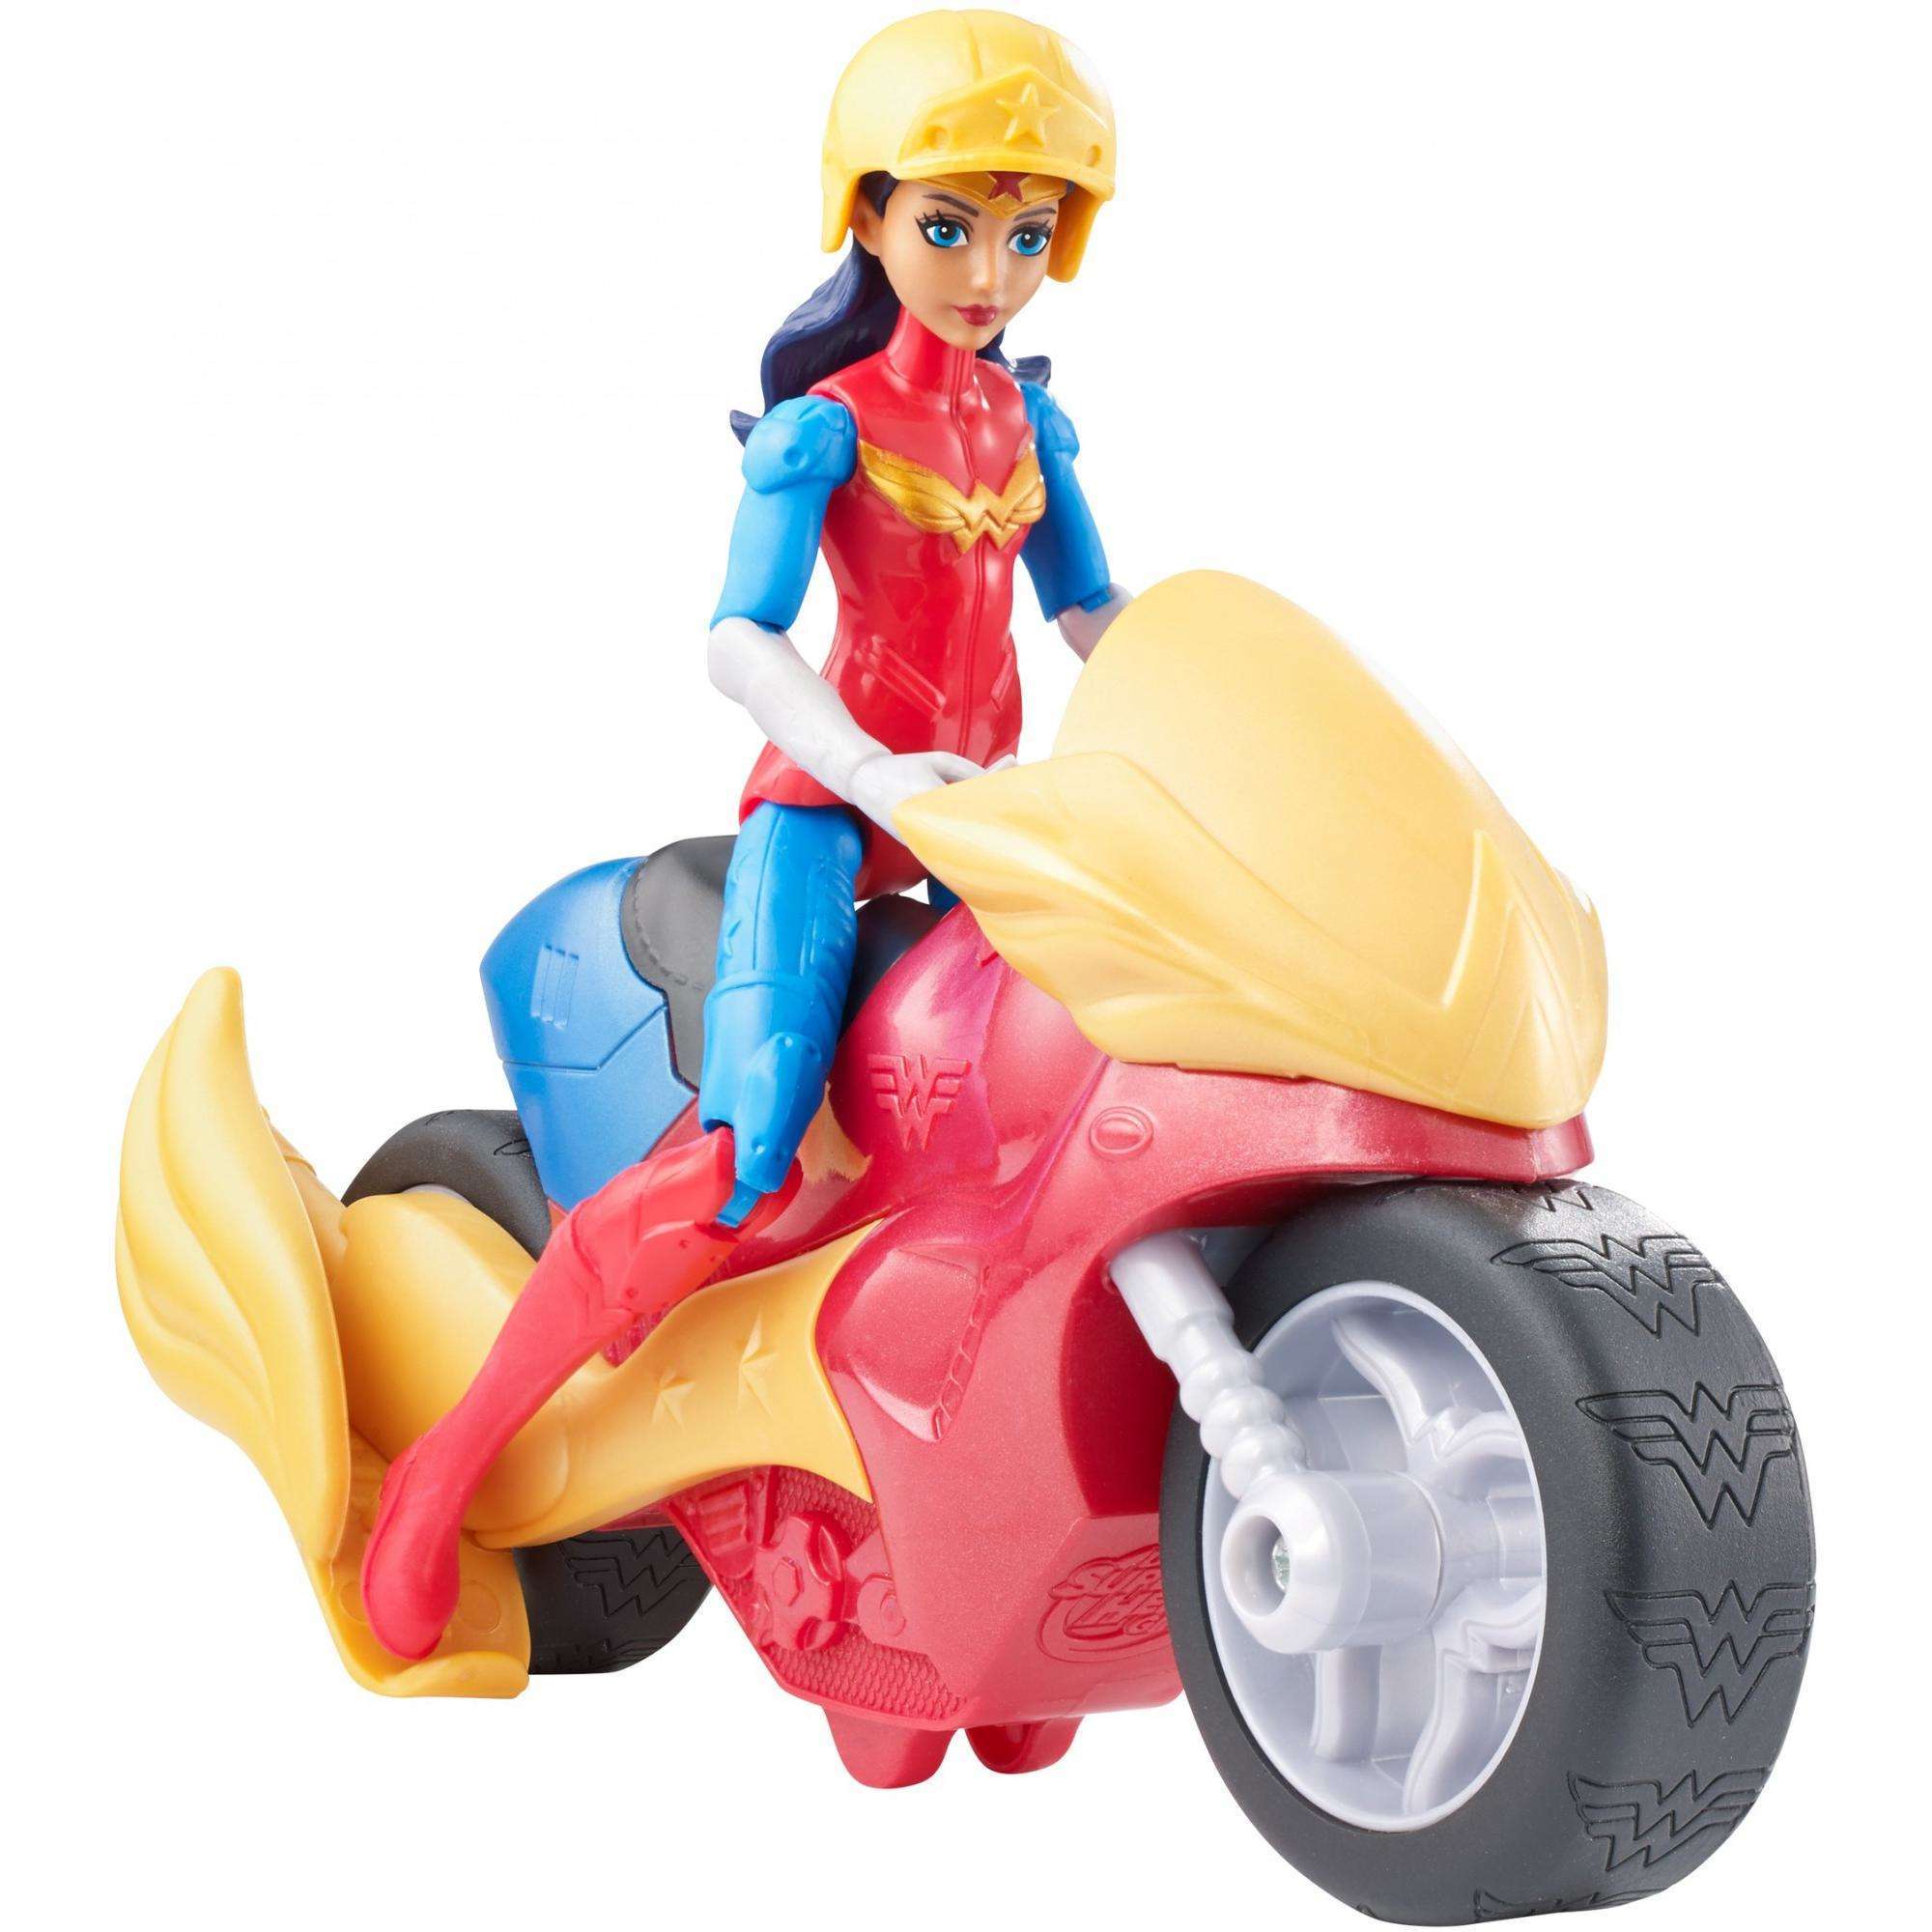 DC Super Hero Girls Wonder Woman & Motorcycle Doll - image 4 of 7